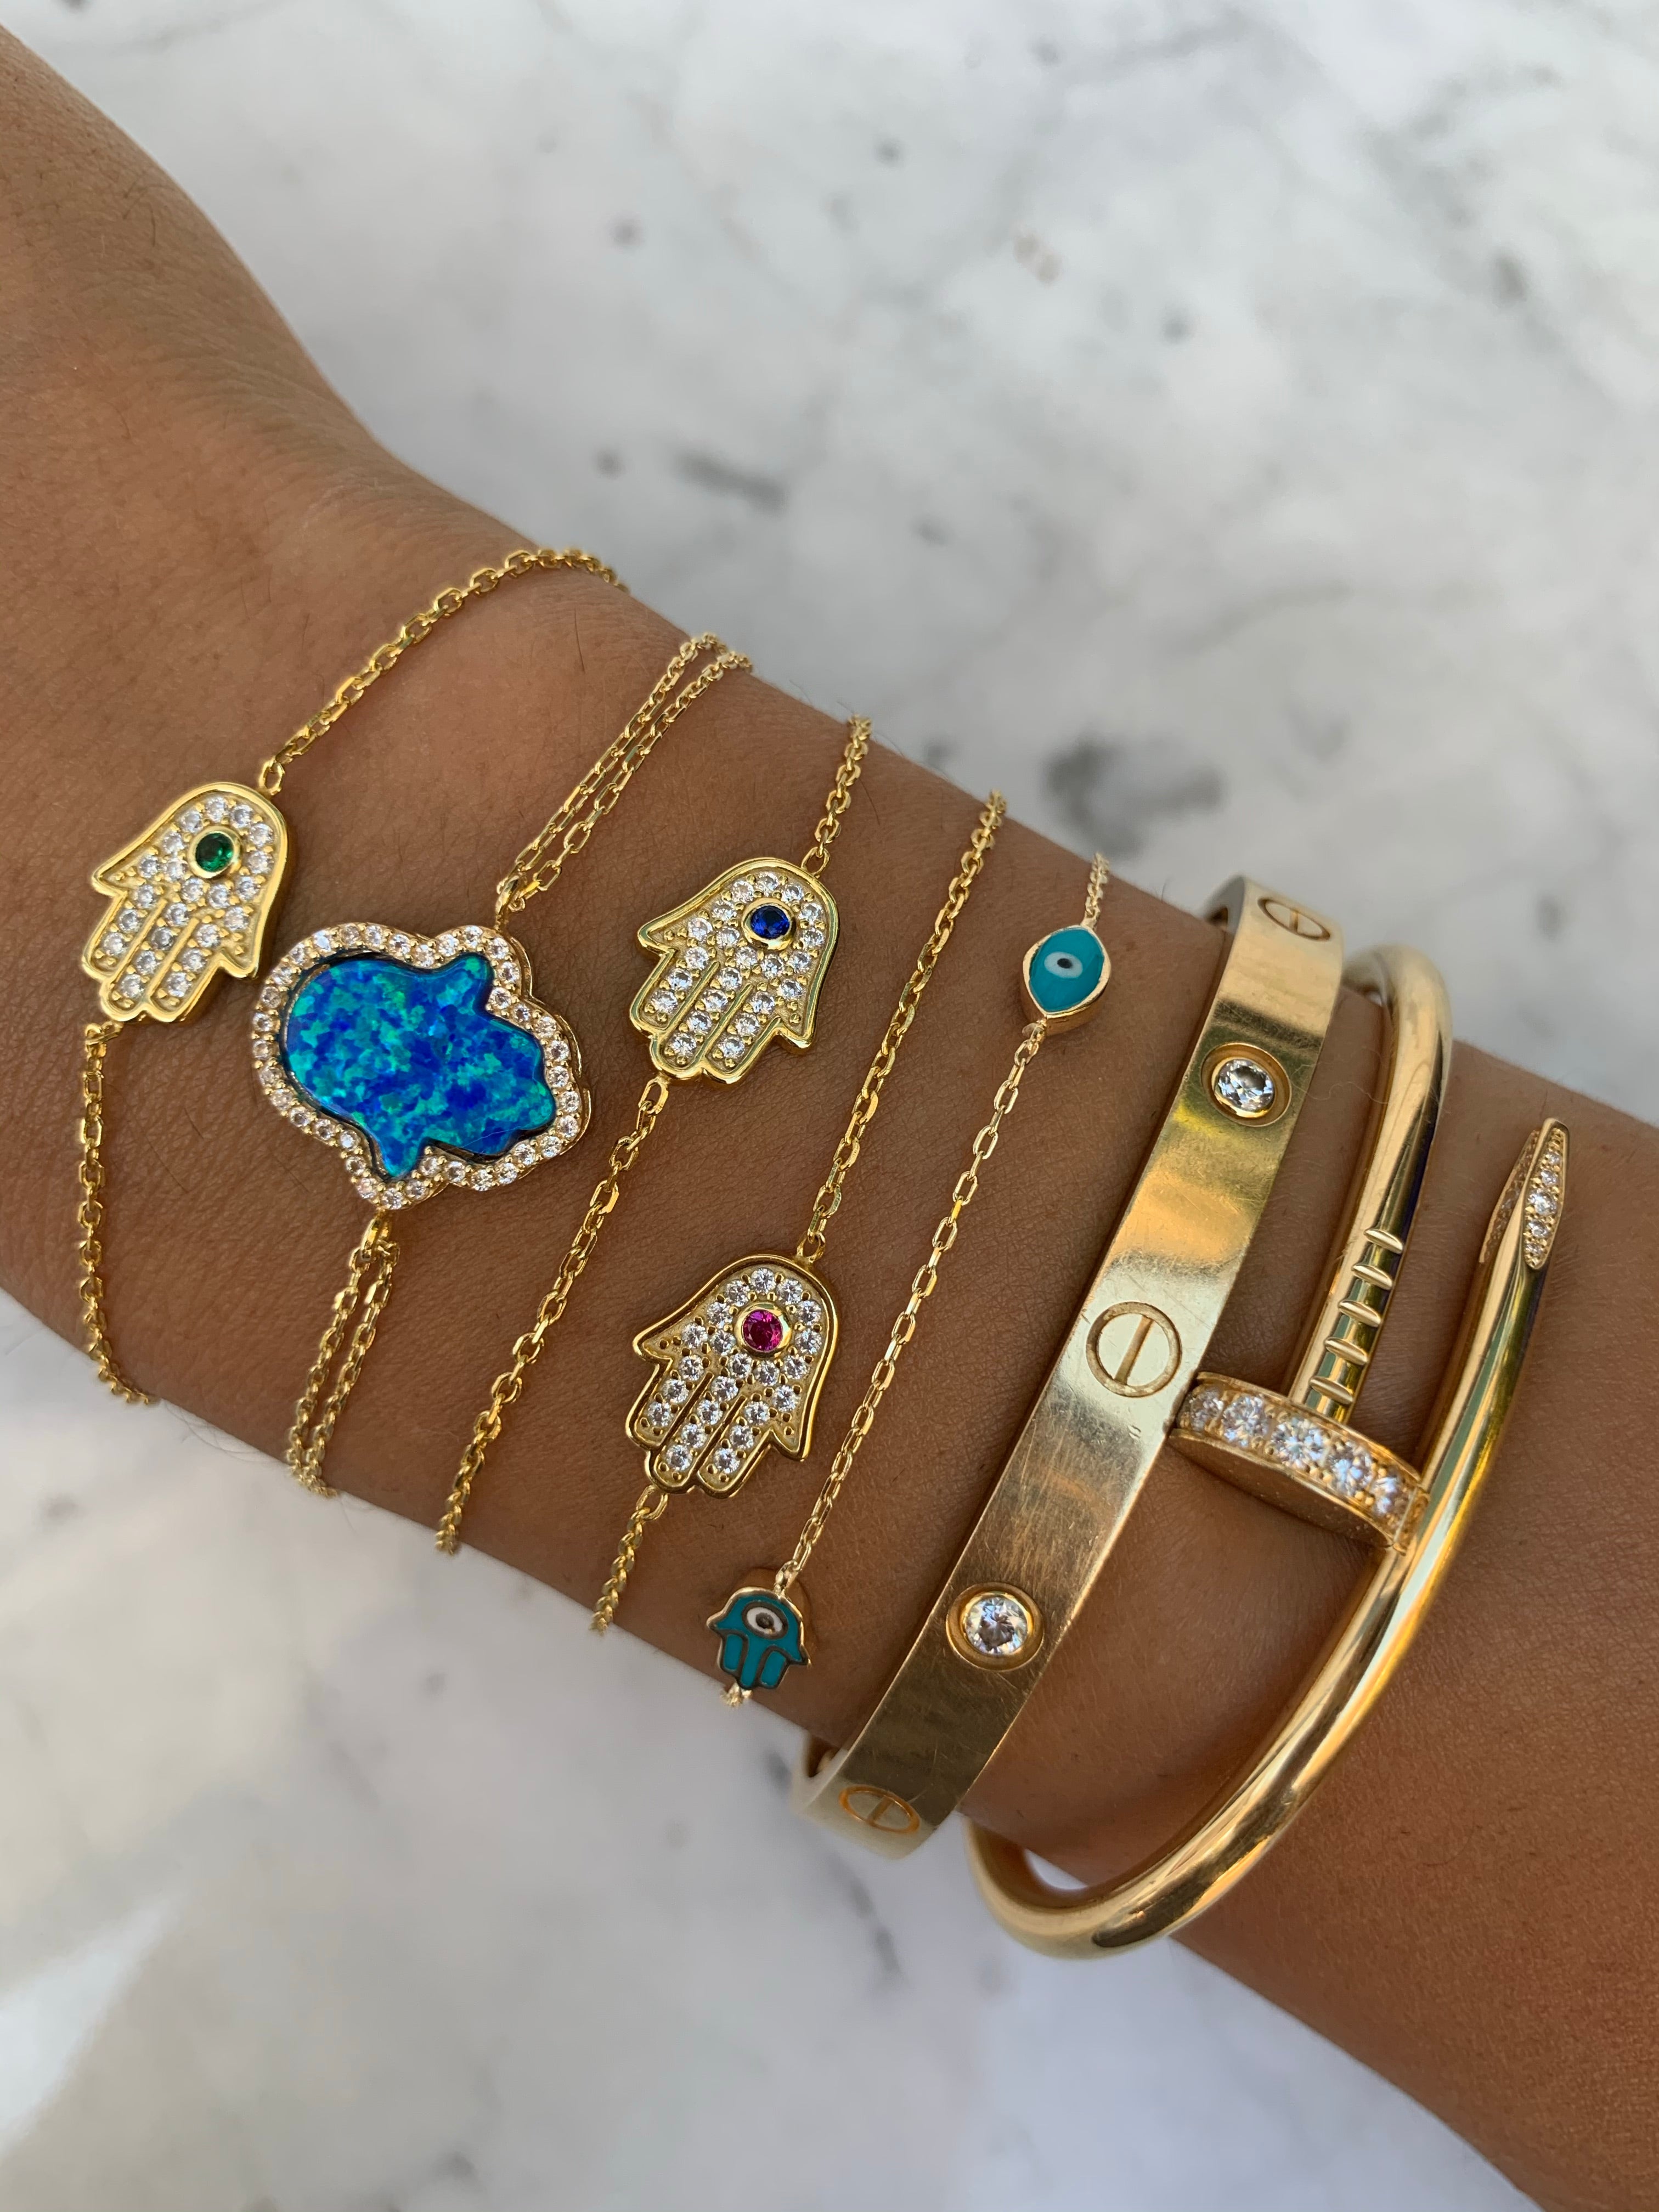 Hamsa Hand Charm With Turquoise Beads 5 Piece Leather Bracelet Set